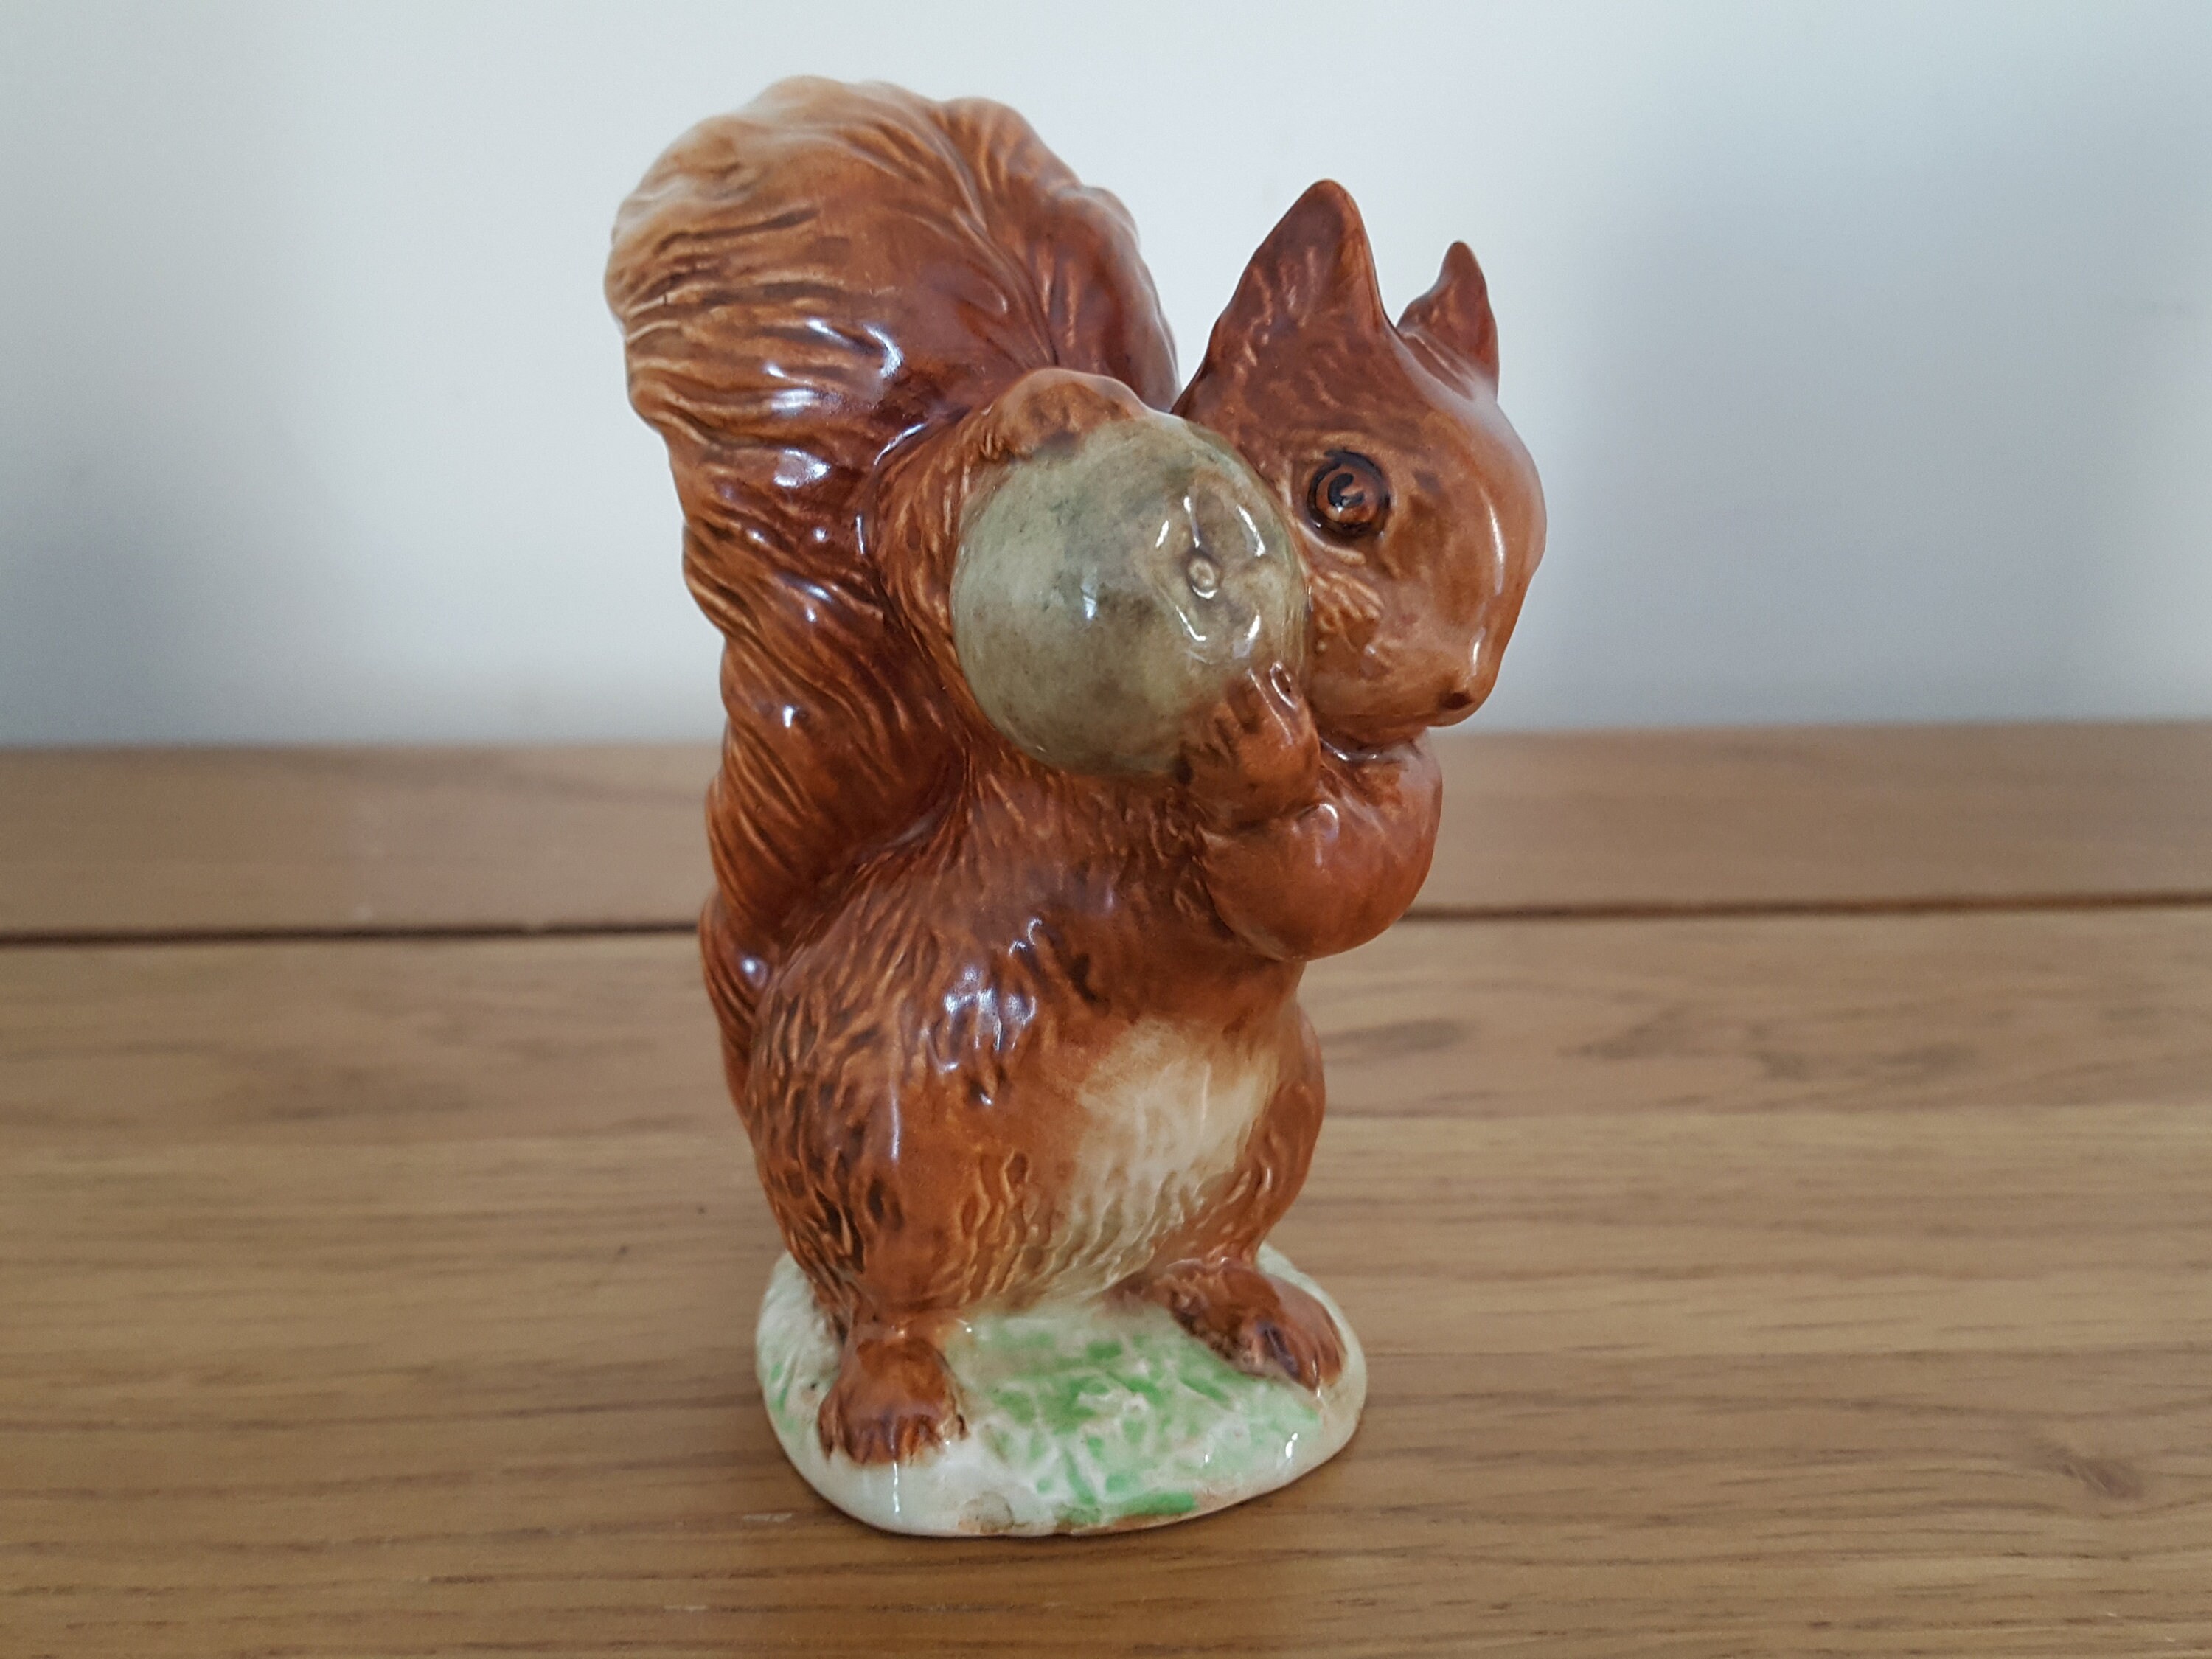 Squirrel Nutkin Beatrix Potter Beswick Pottery Figurine